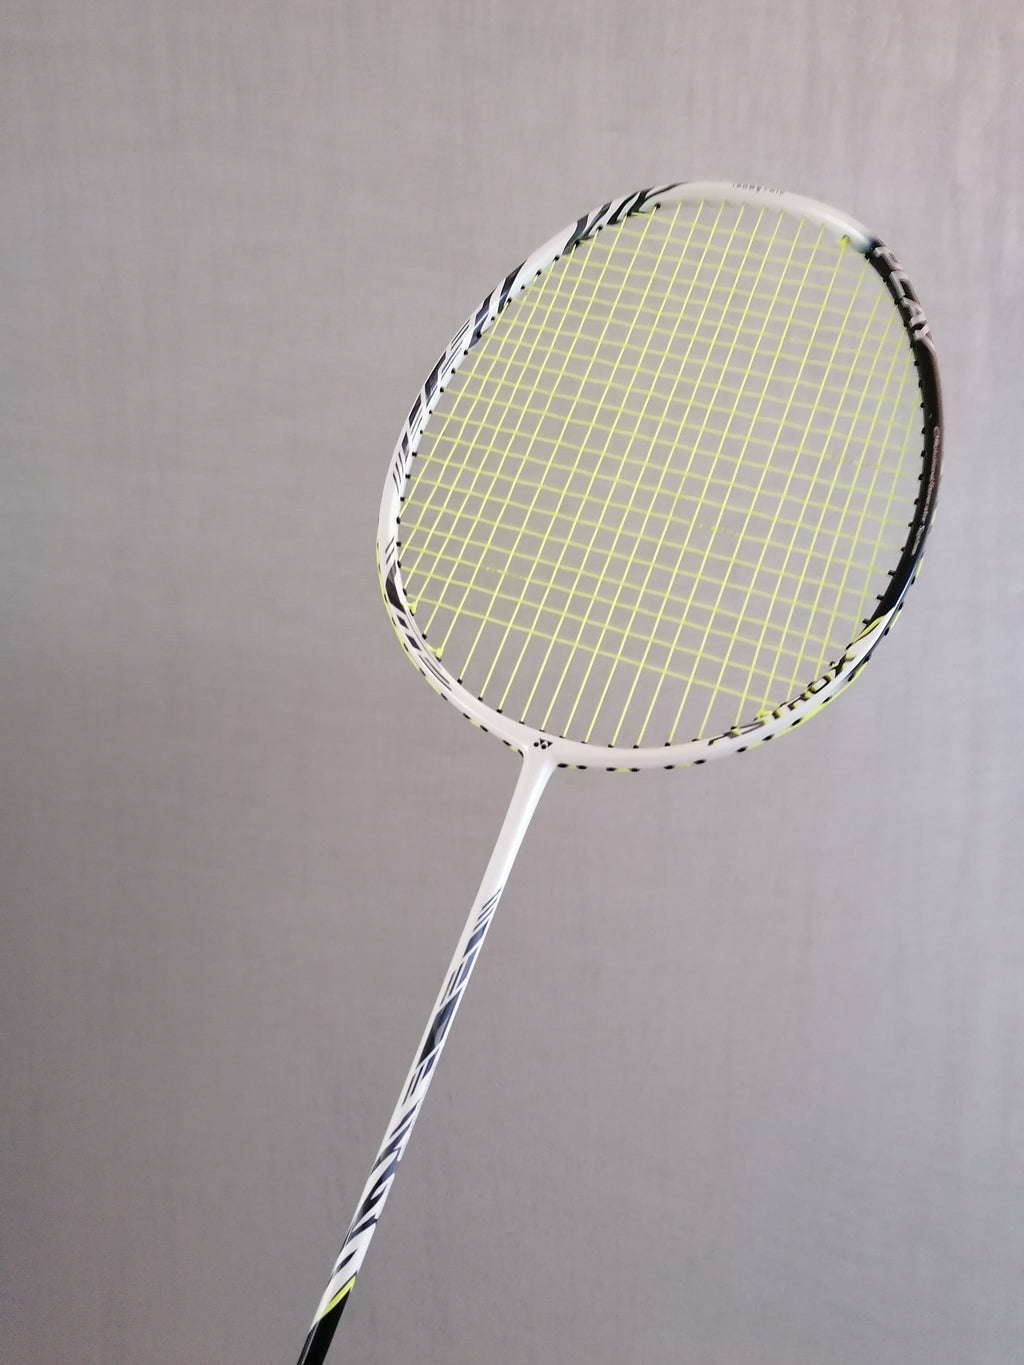 Yonex Astrox 99 Play 4U badminton racket badminton racket review